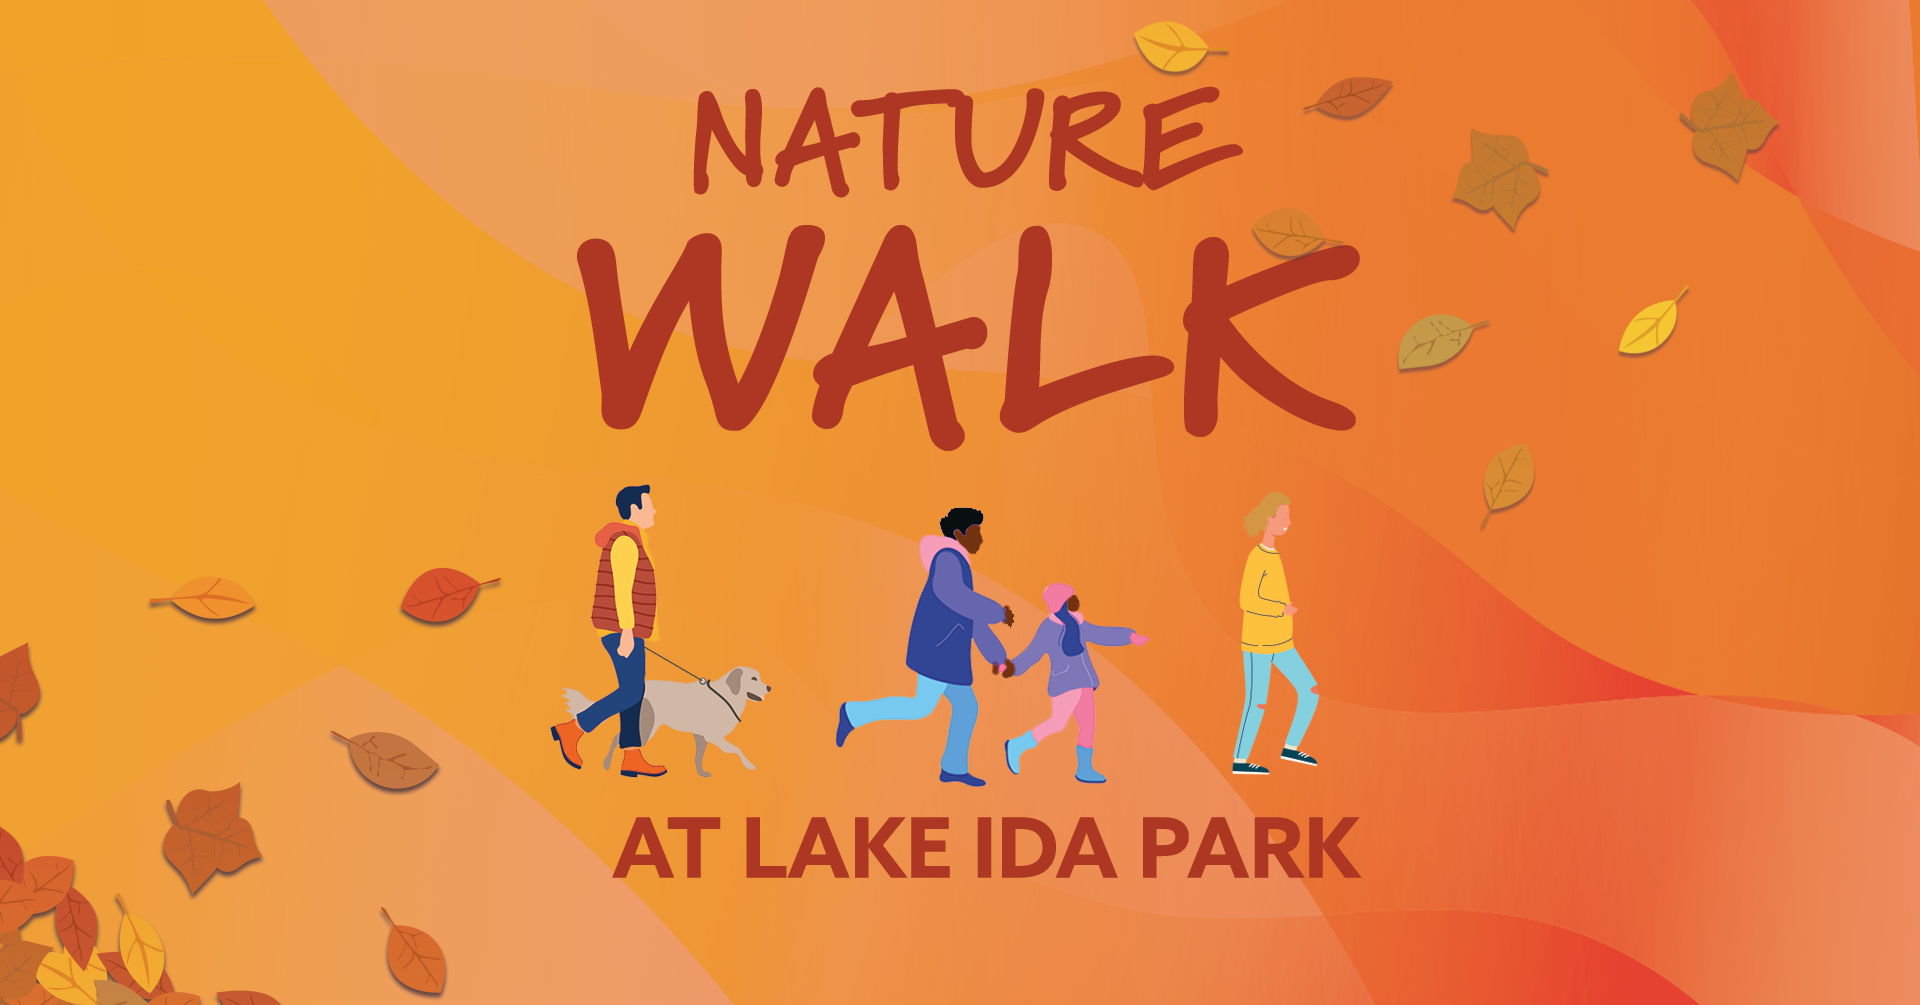 Guided Nature Walk around Lake Ida Park on October 15th 2022